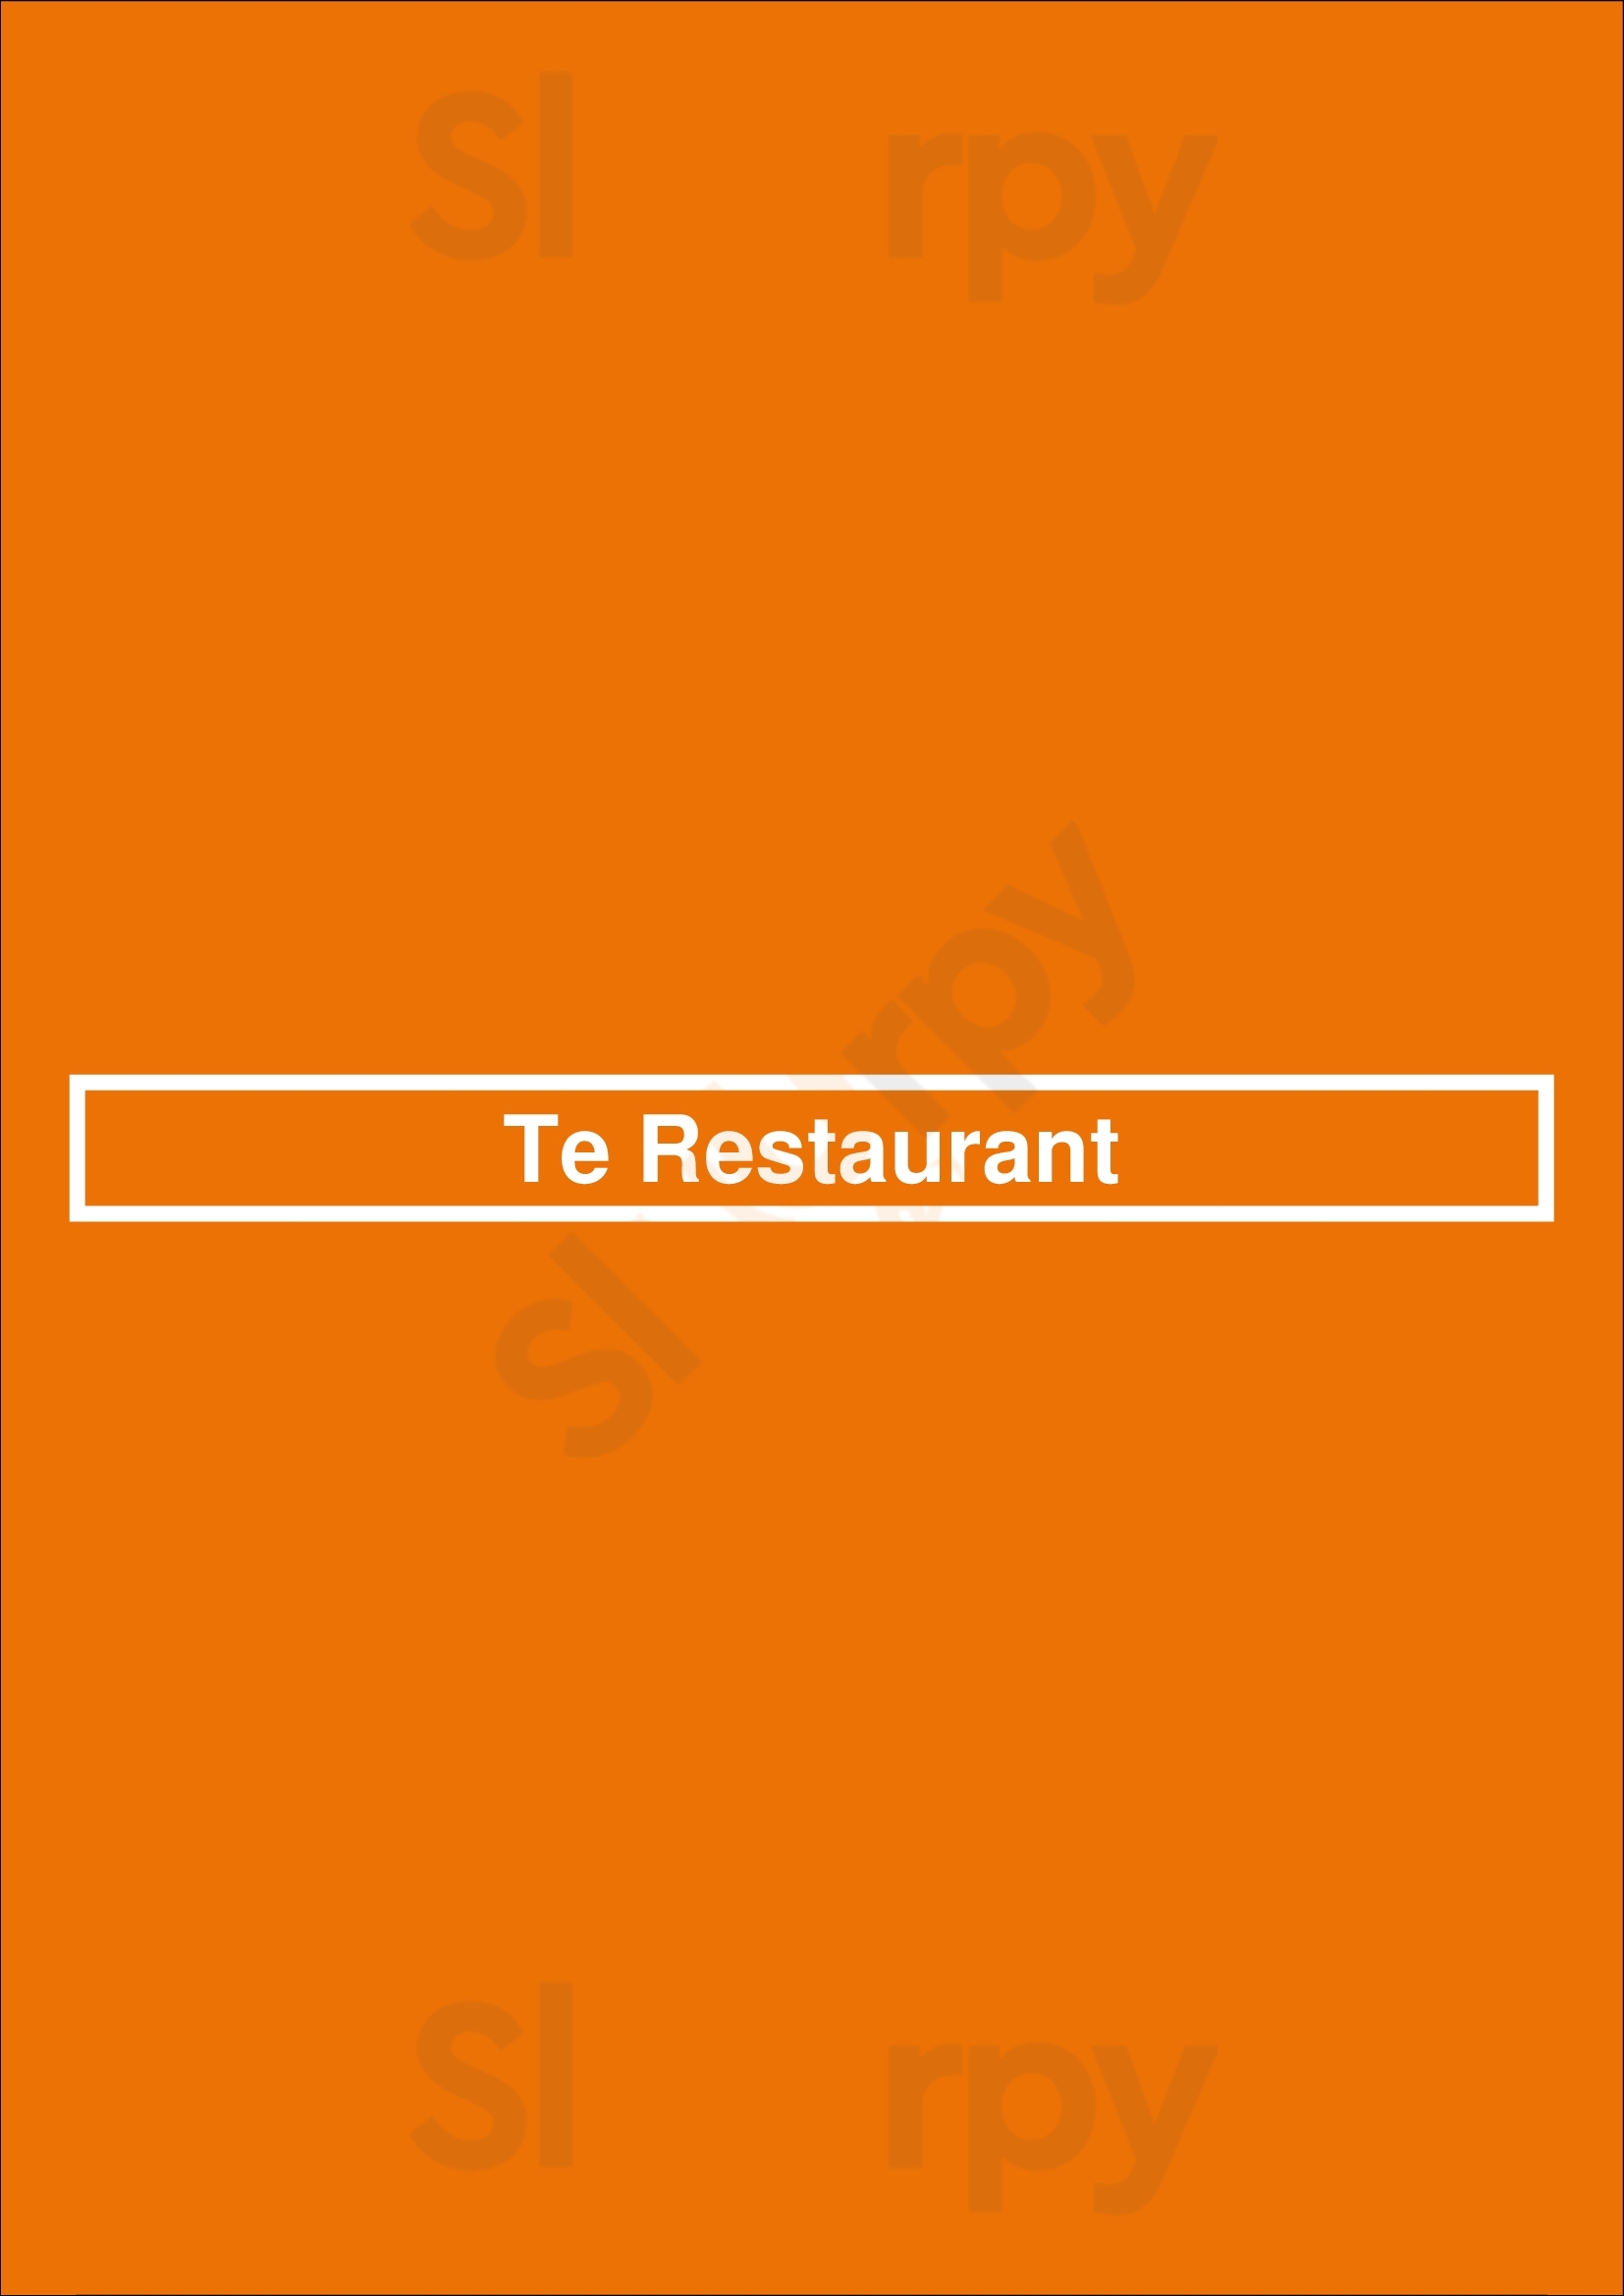 Te Restaurant Toronto Menu - 1